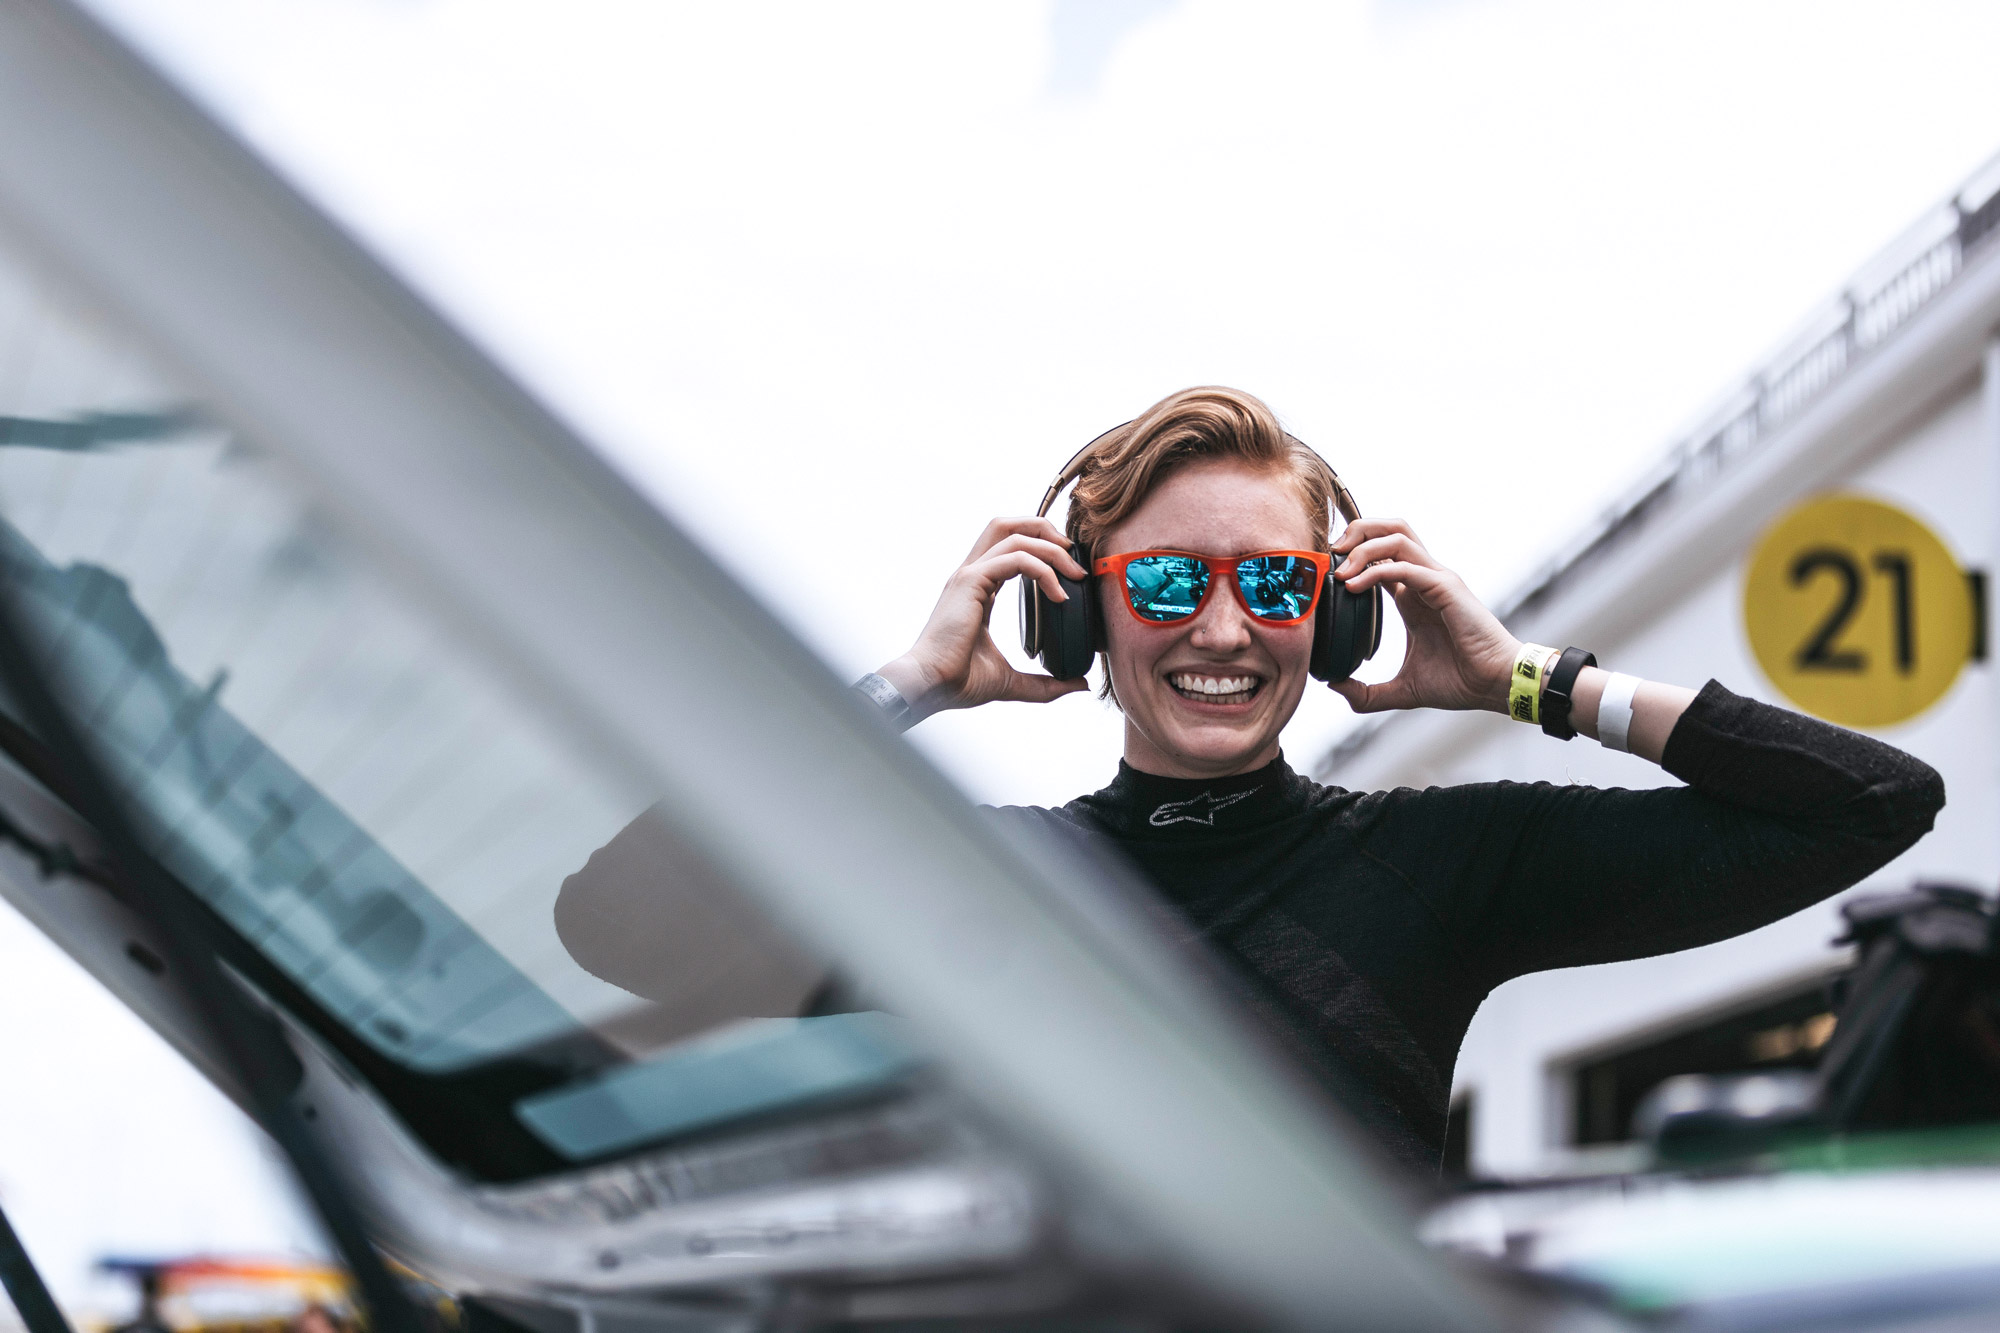 Woman racecar driver, wearing sunglasses, puts headphones on at racetrack